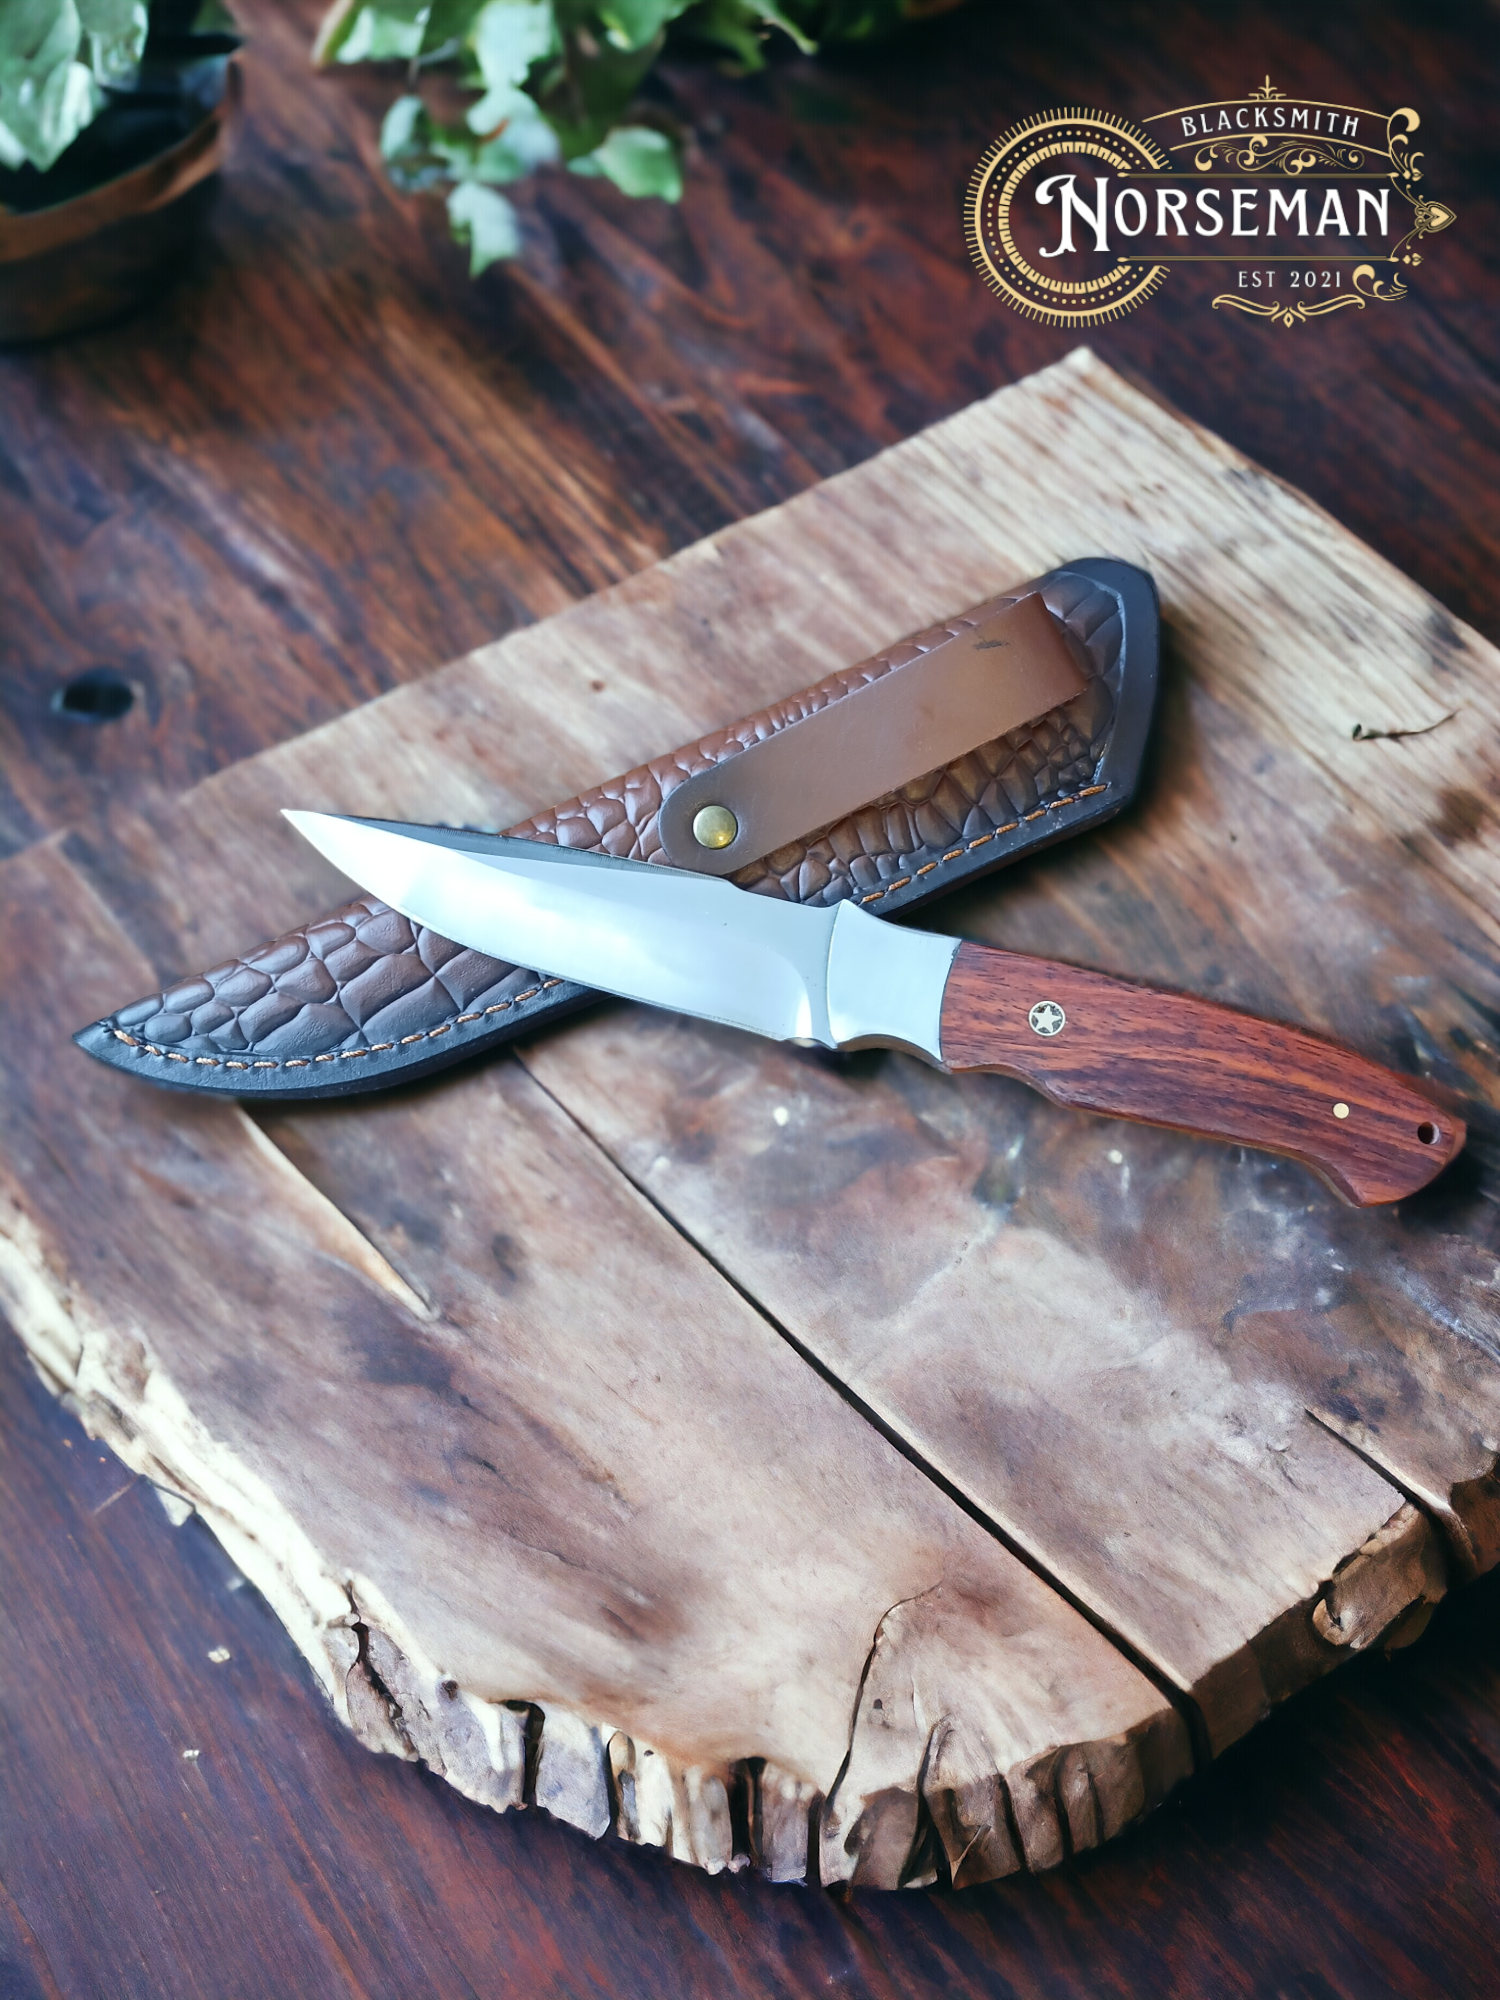 Spear Point Bush Craft Knife – The Norseman Blacksmith